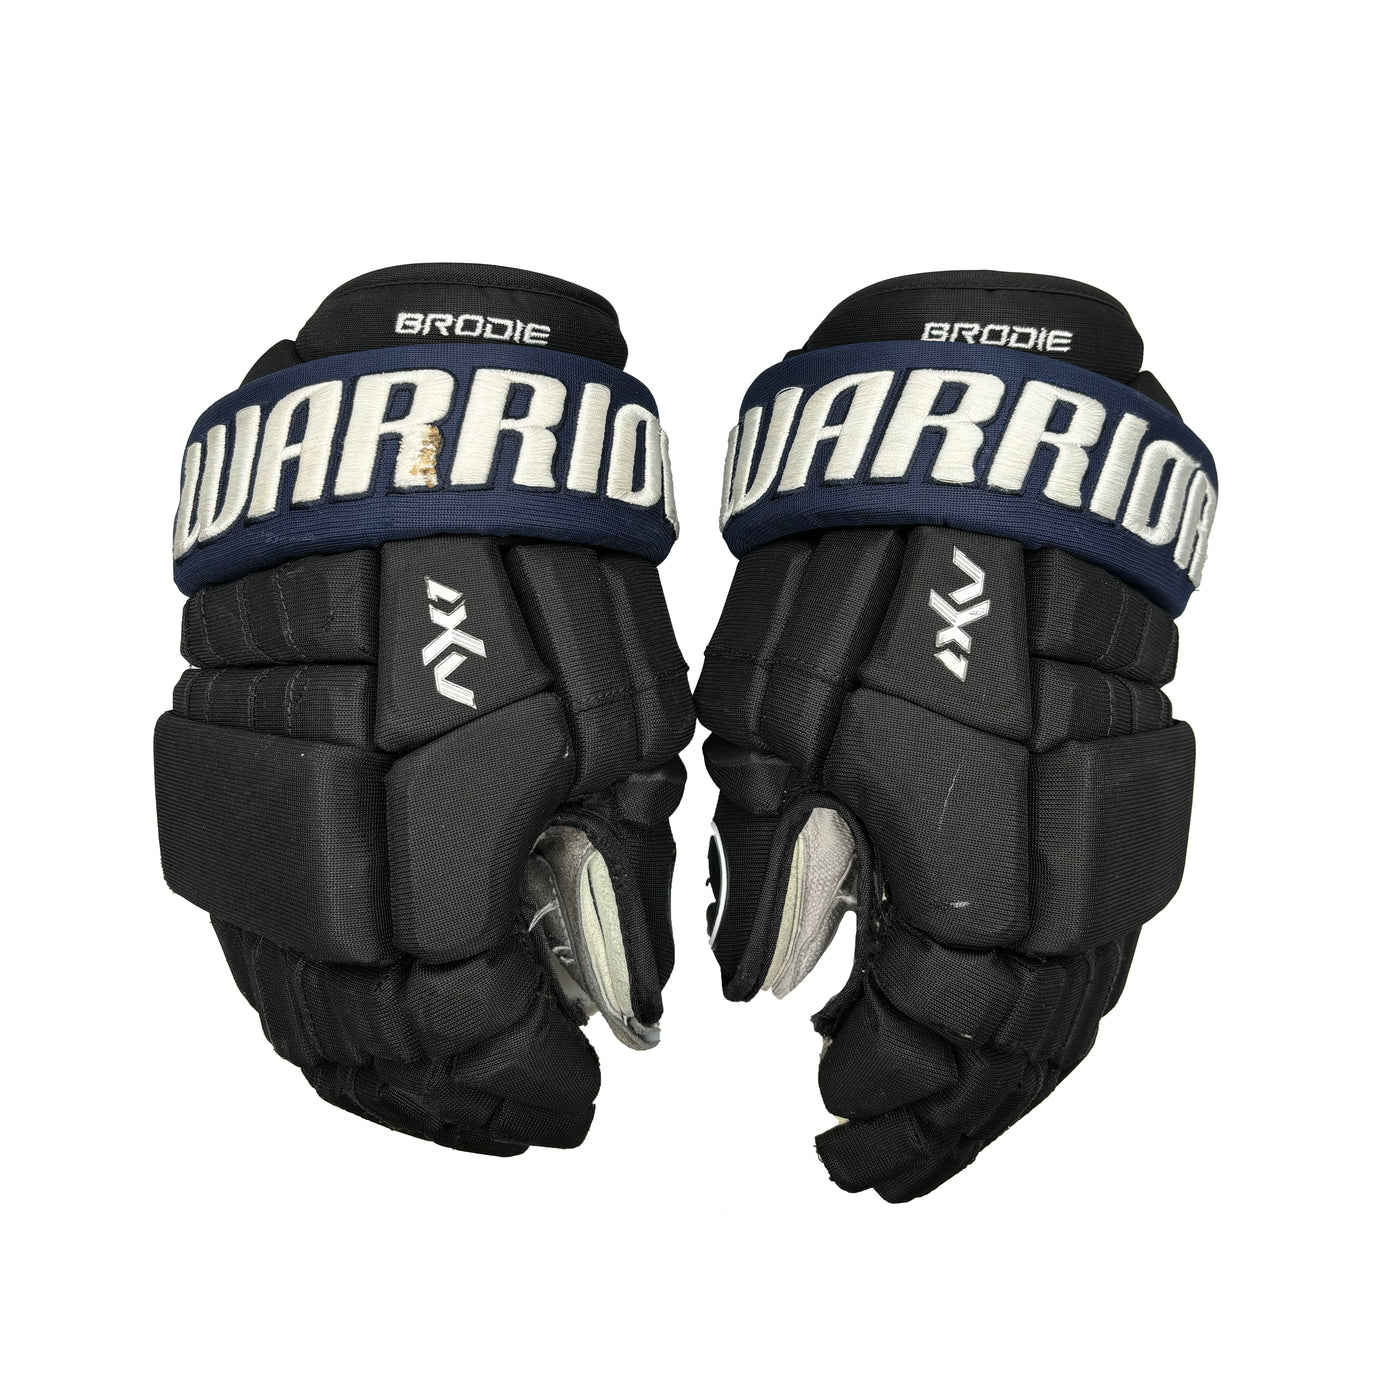 Warrior Franchise AX1 -  Toronto Maple Leafs - Drew House - Used Pro Stock Glove - TJB